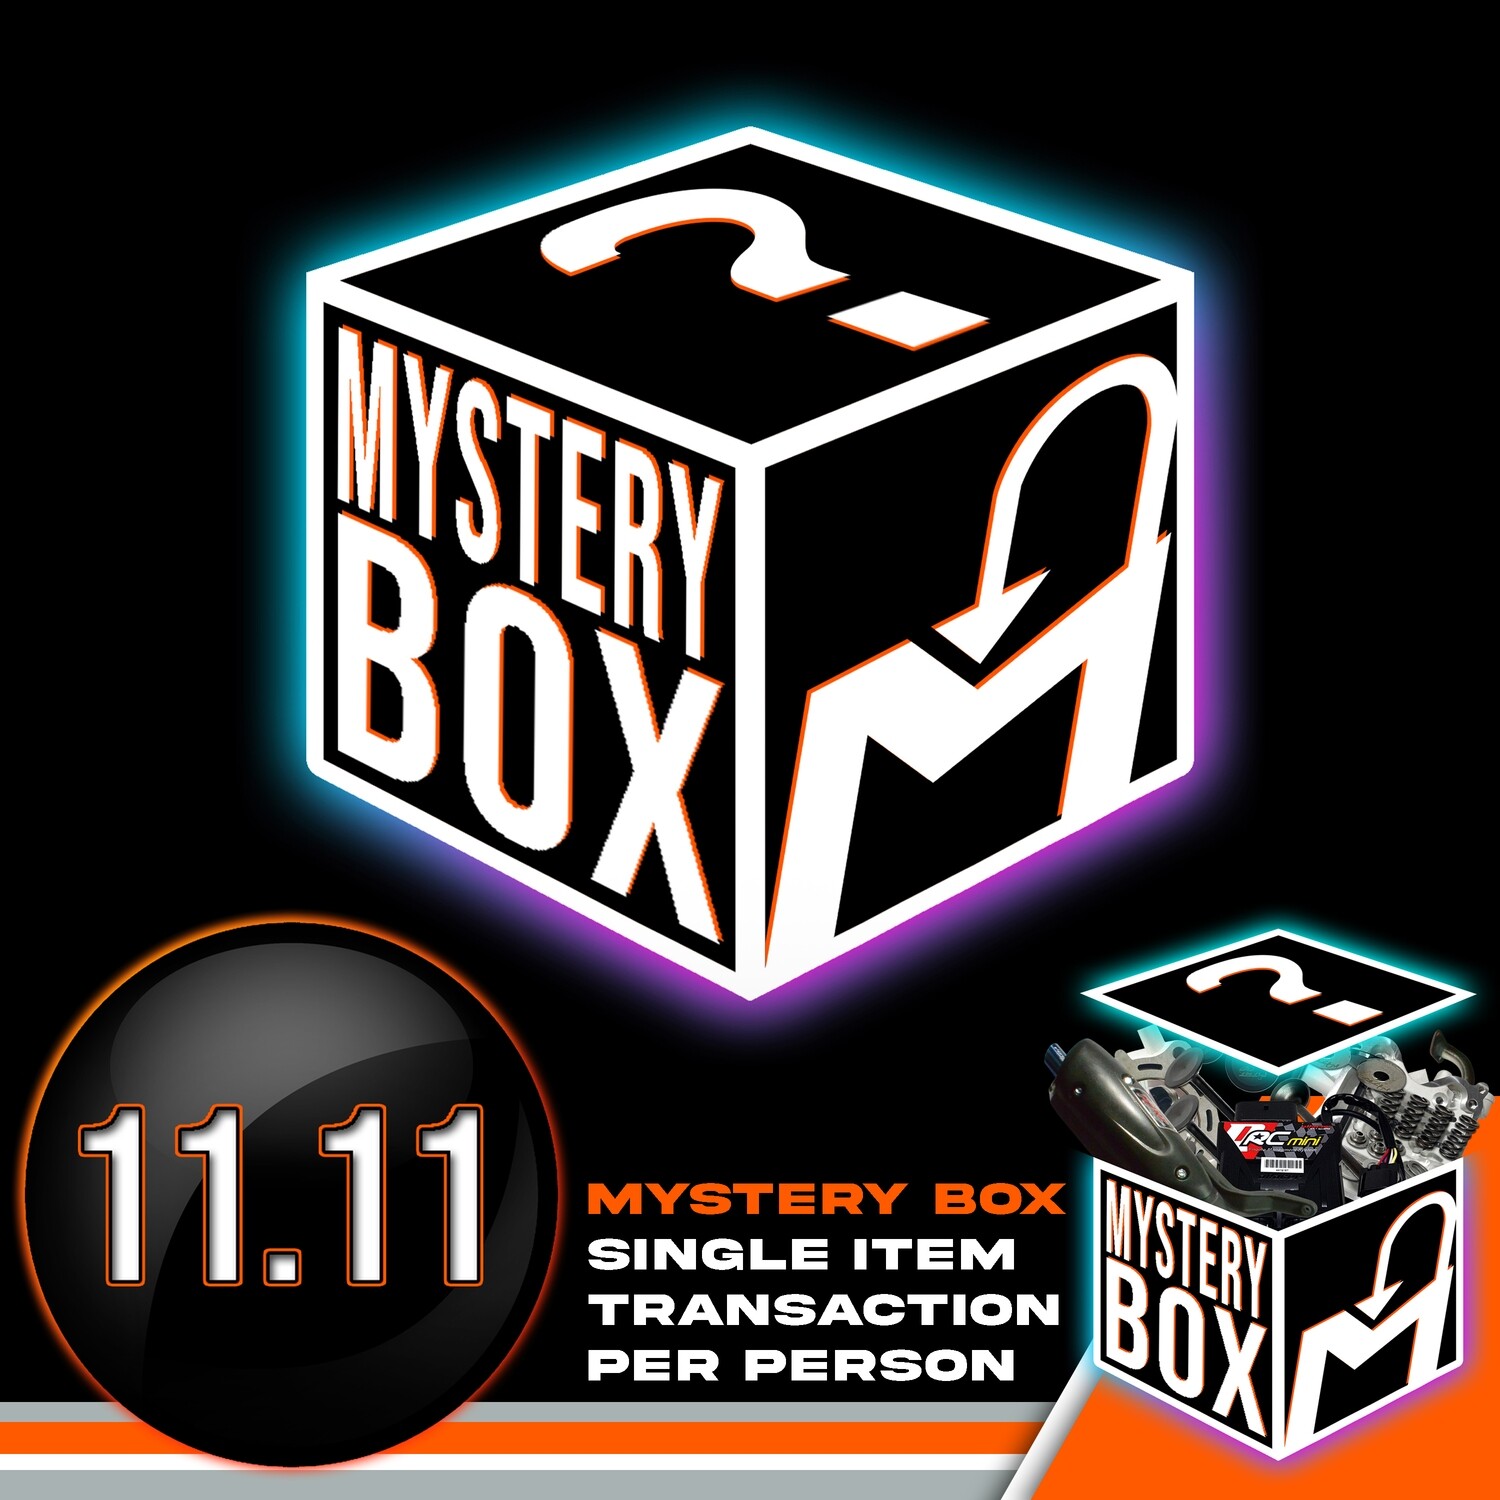 MYSTERY BOX #109 (11.11 PROMO)